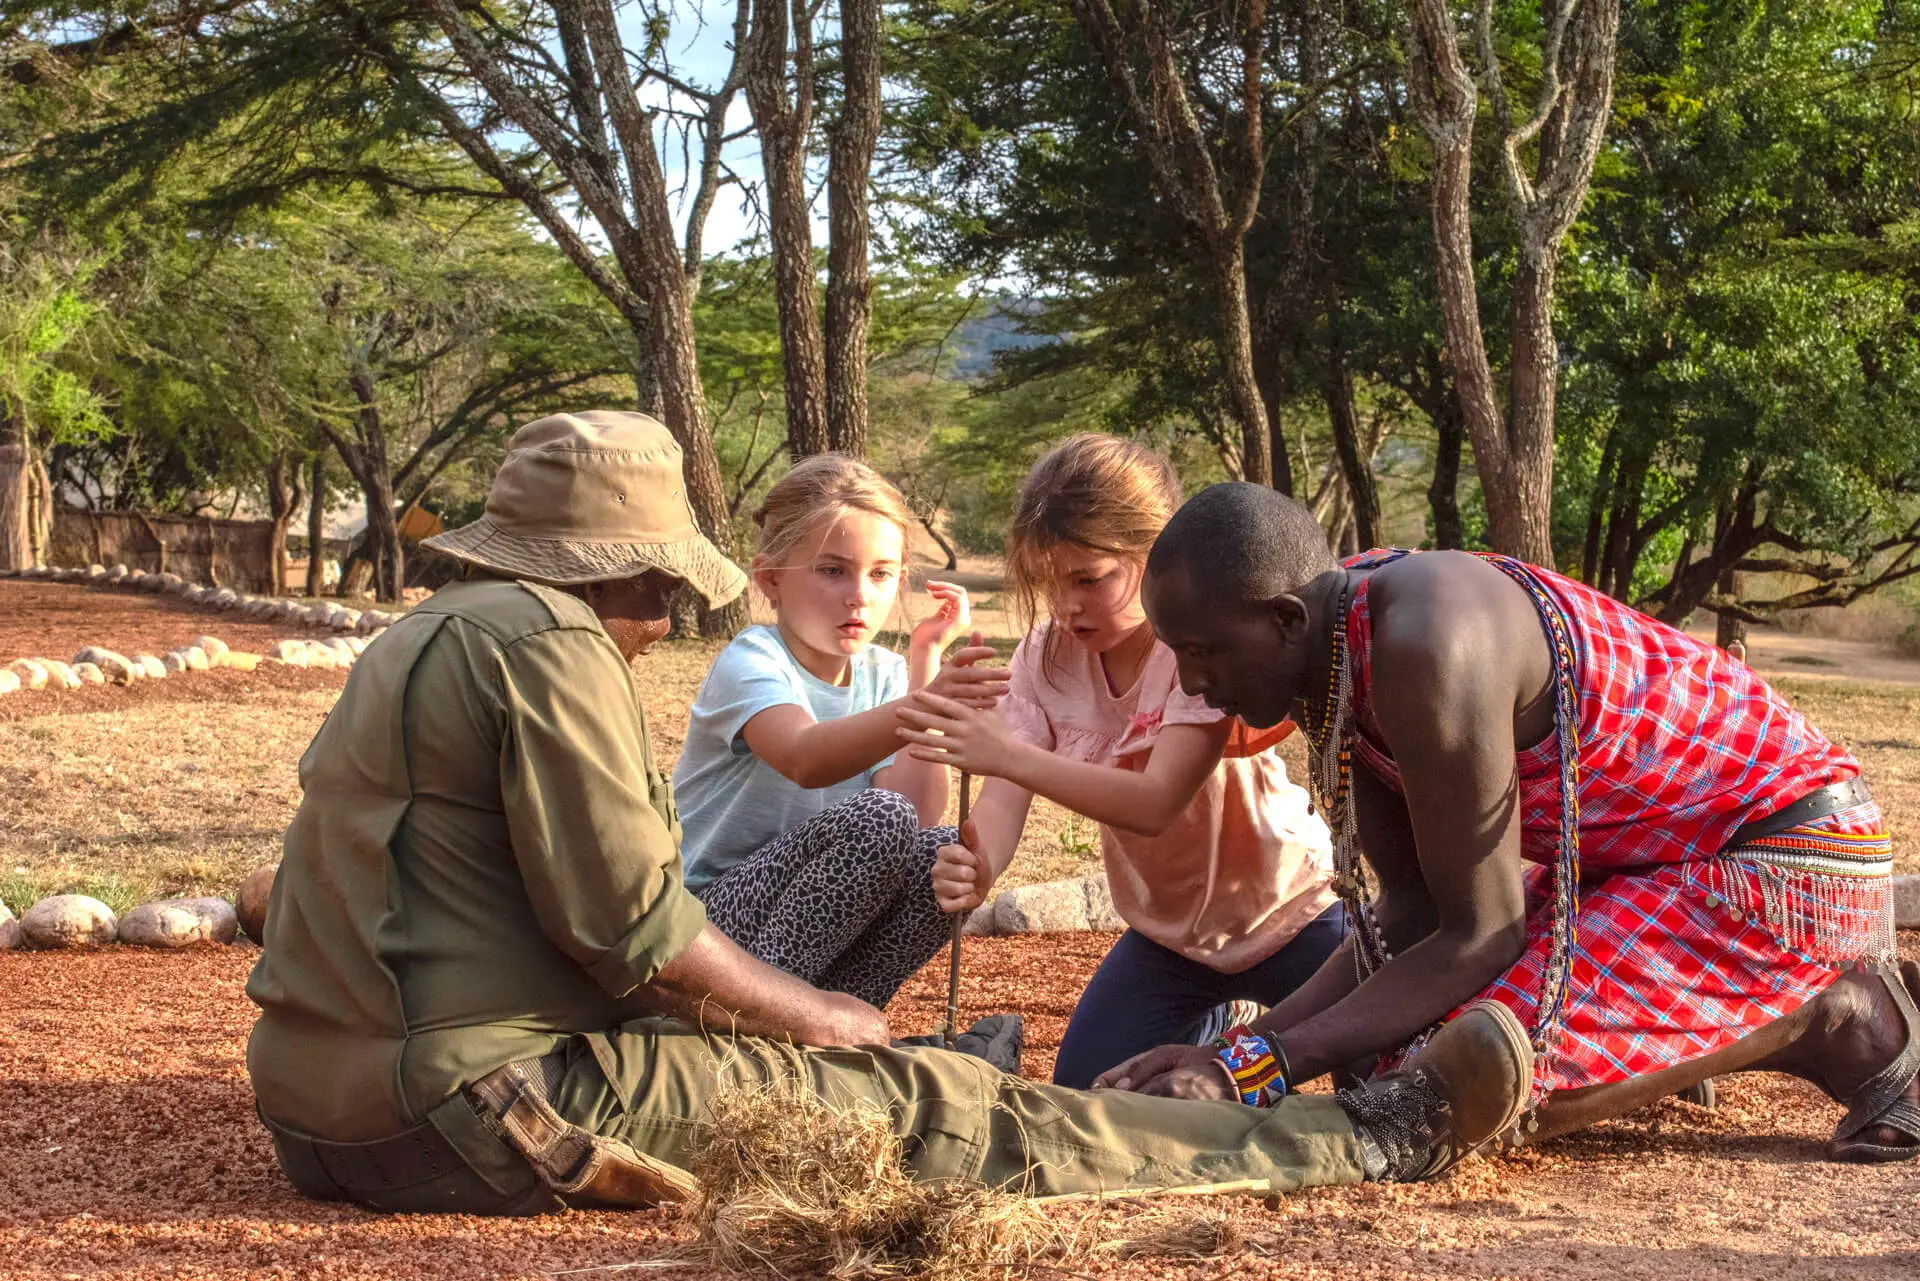 Family-friendly Safari trips to Kenya - child-friendly activities by Cottar’s Safari